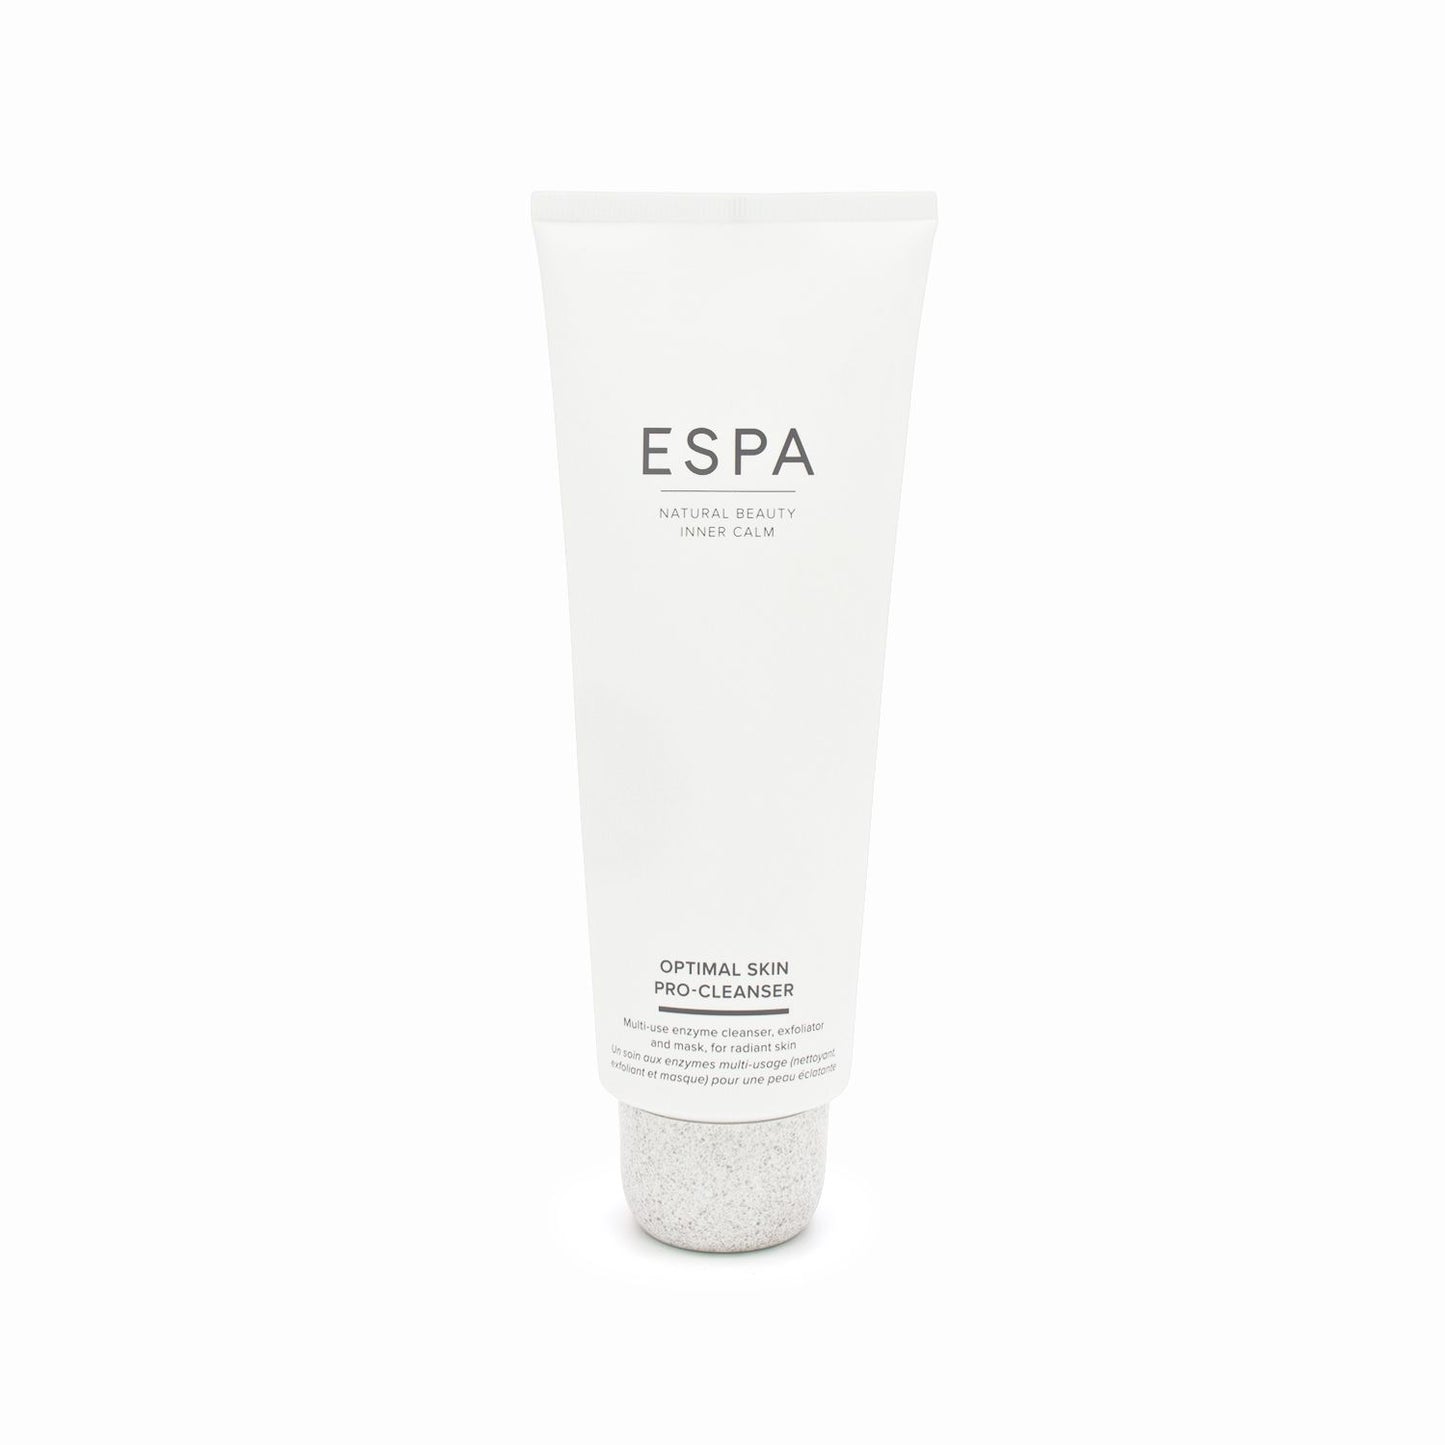 ESPA Optimal Skin Pro-Cleanser 200ml - Missing Box